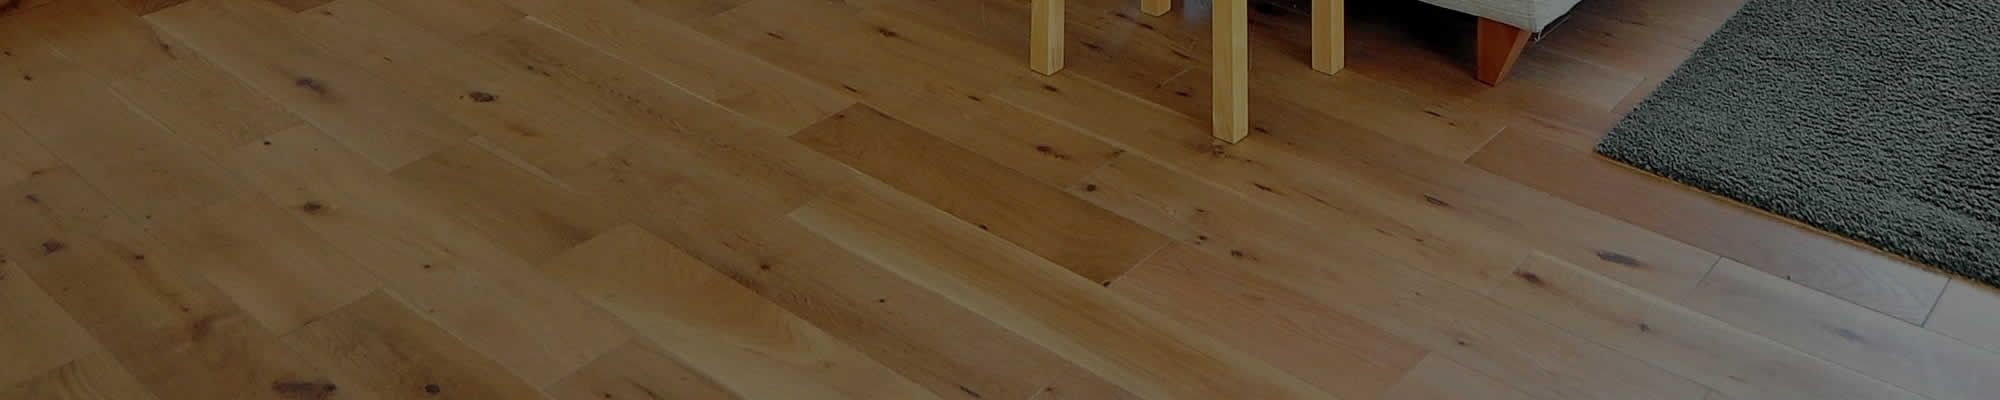 Hardwood Floor Refinishing West Allis WI